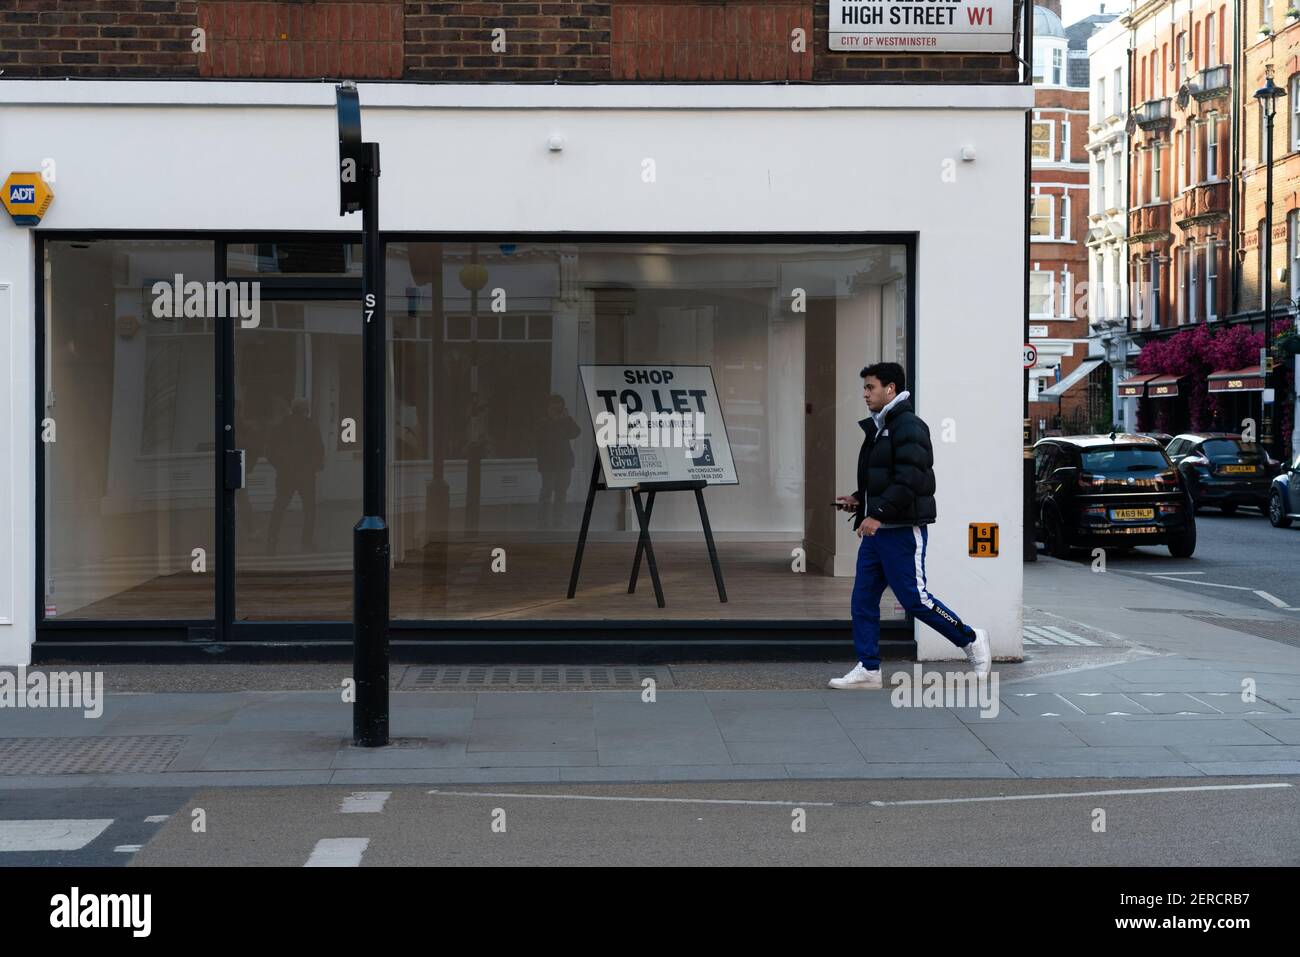 Shop to let Marylebone high street Stock Photo